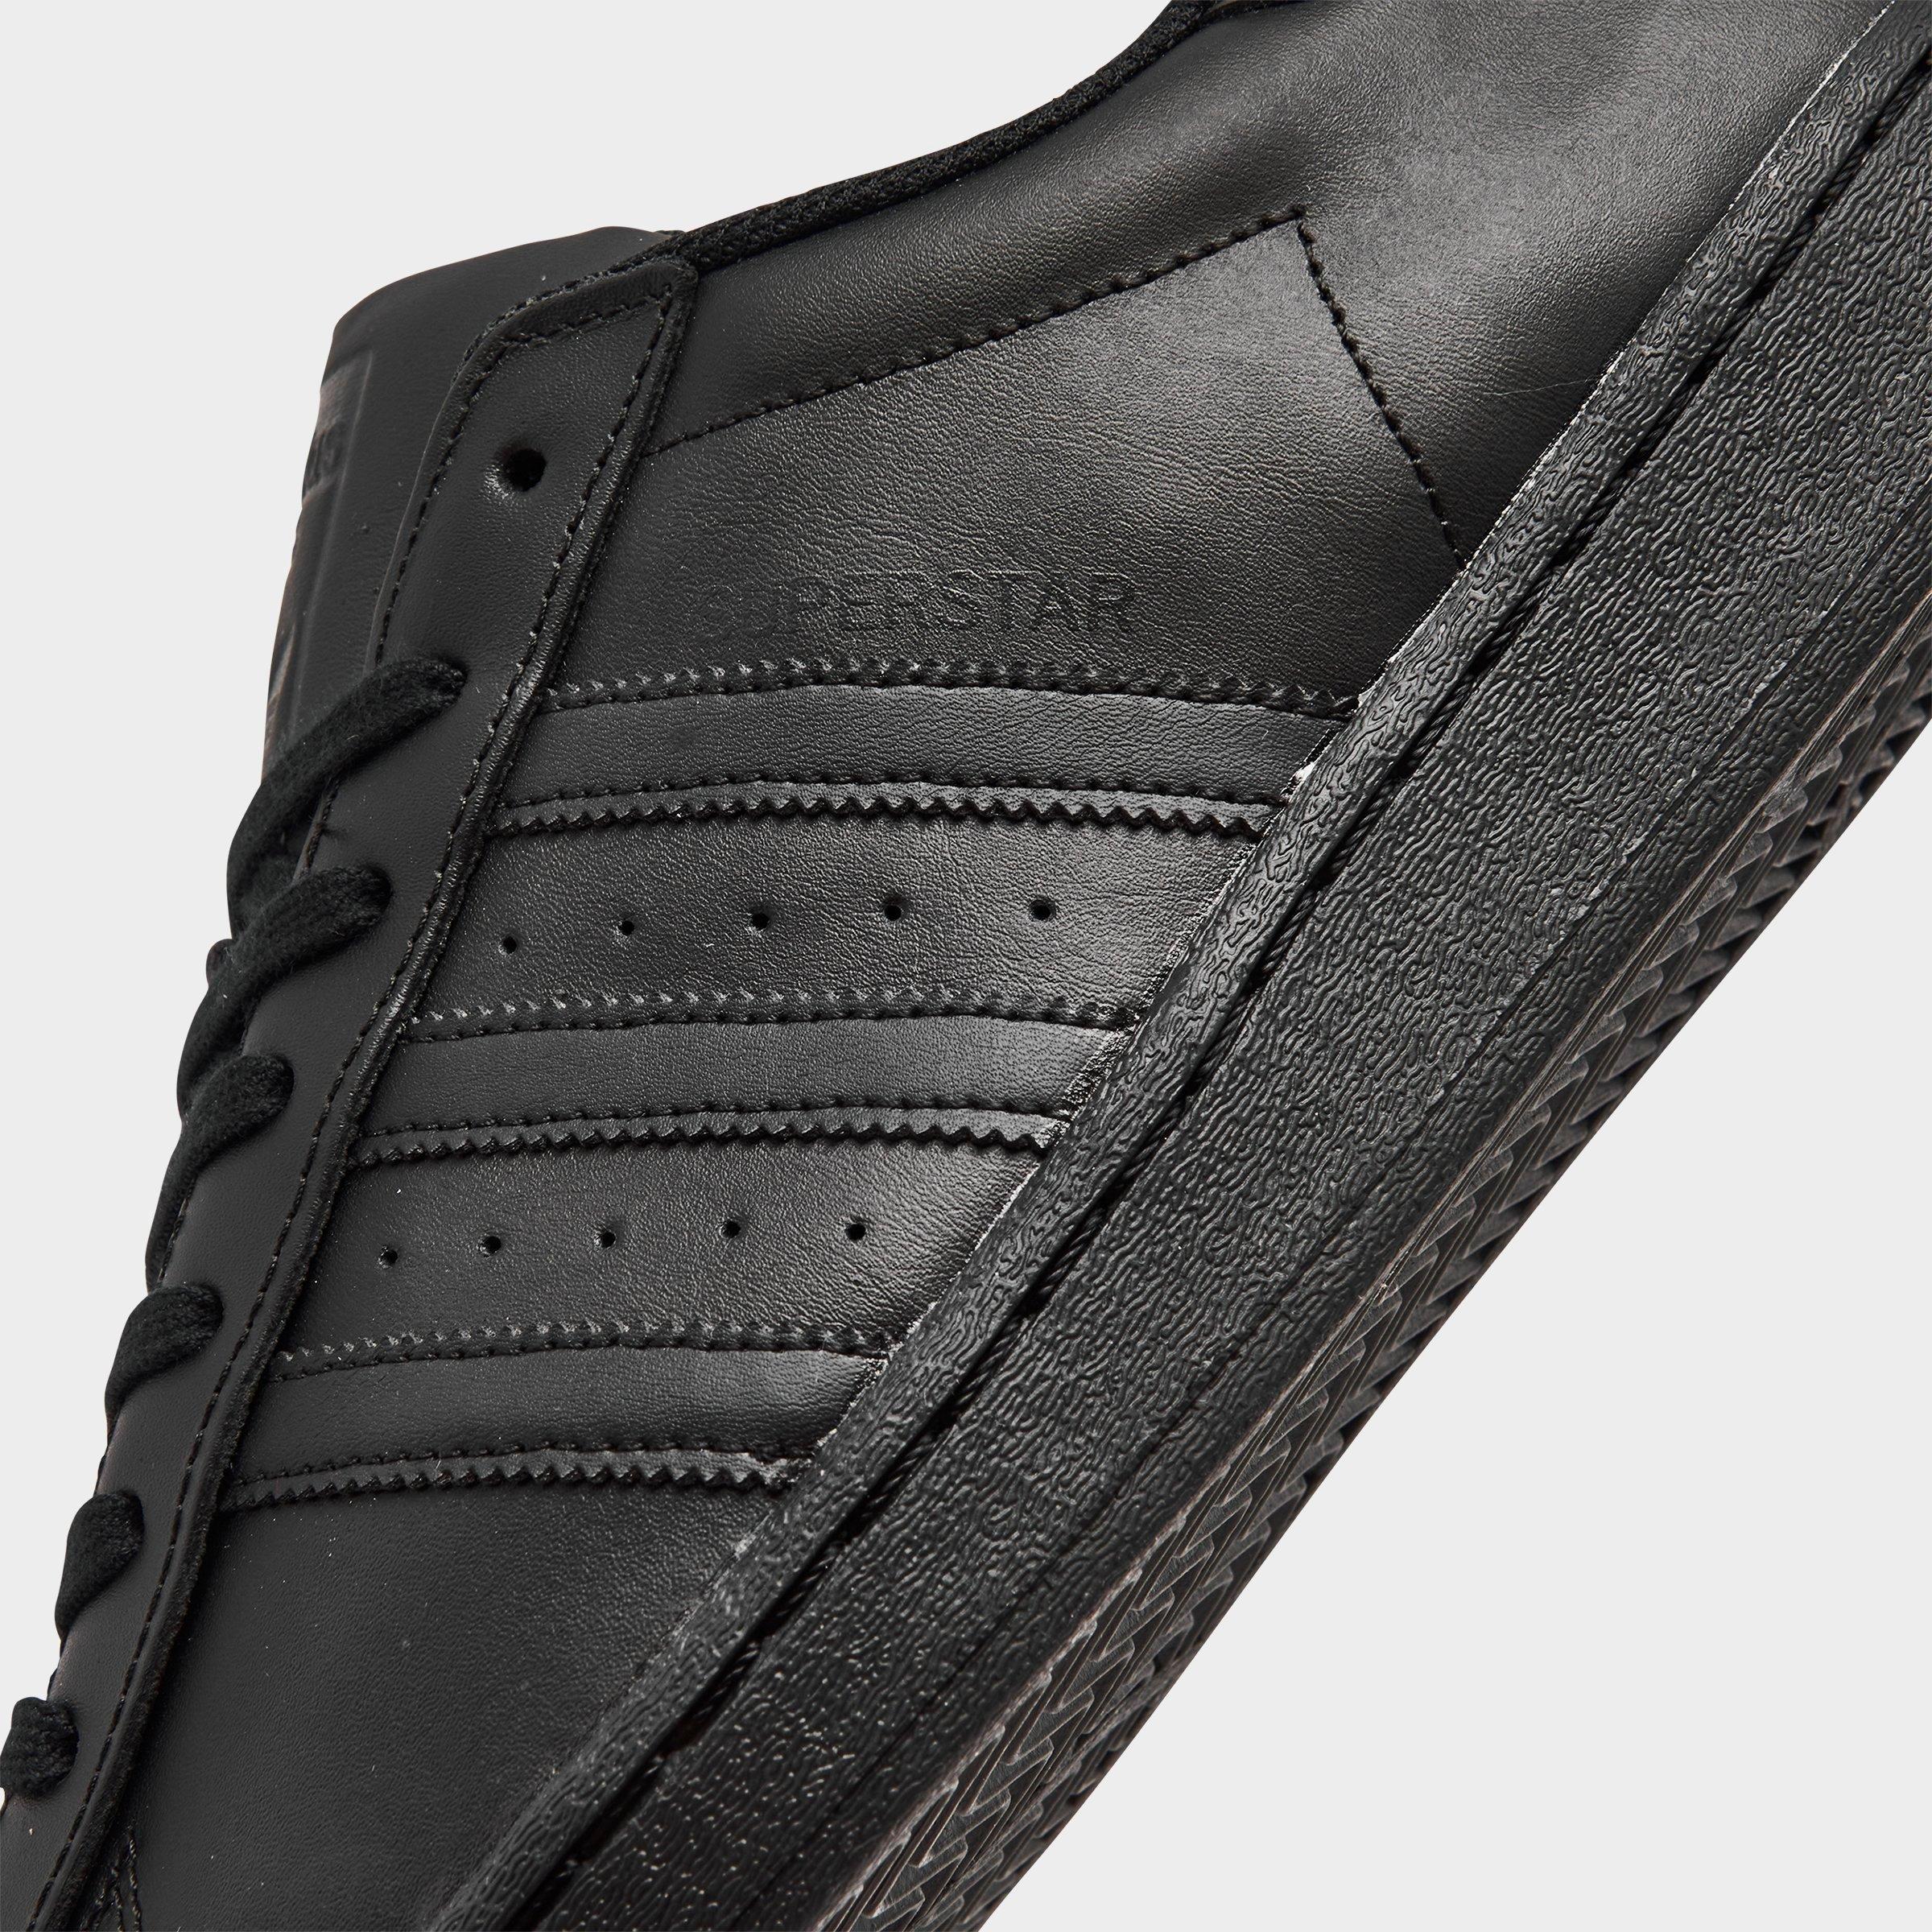 adidas black casual shoes